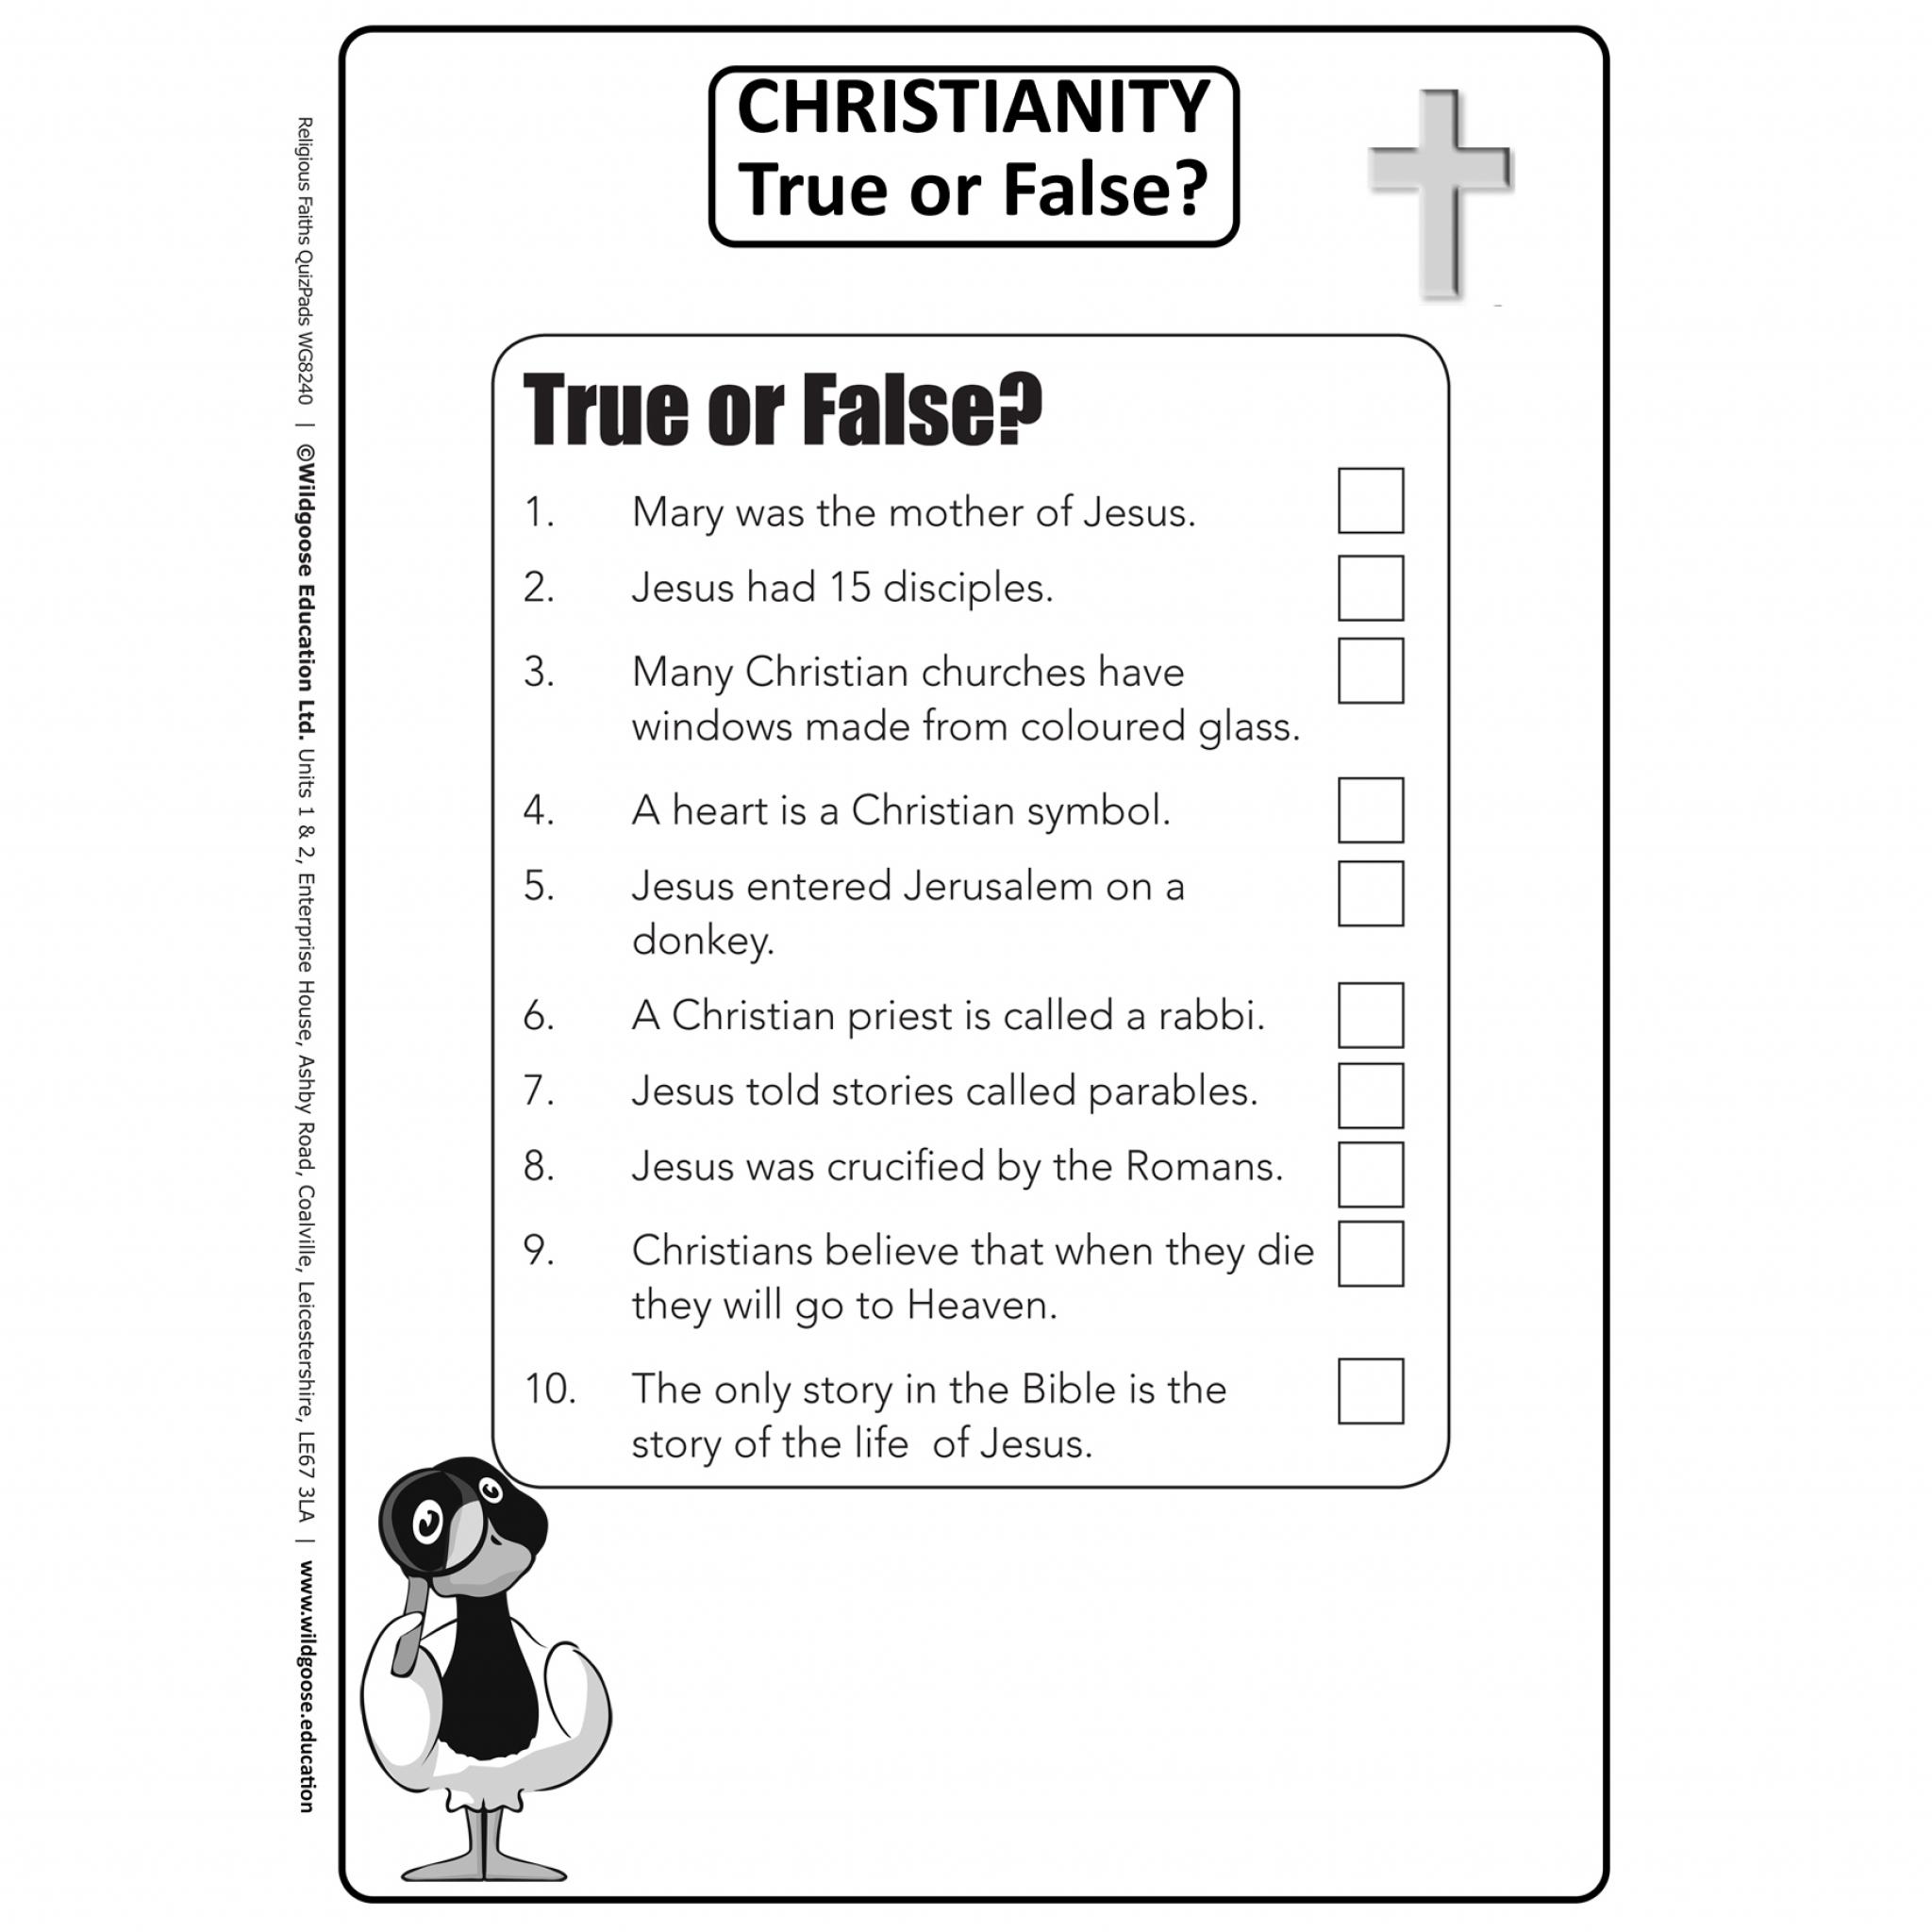 Christianity_Quiz_03 Wildgoose Education